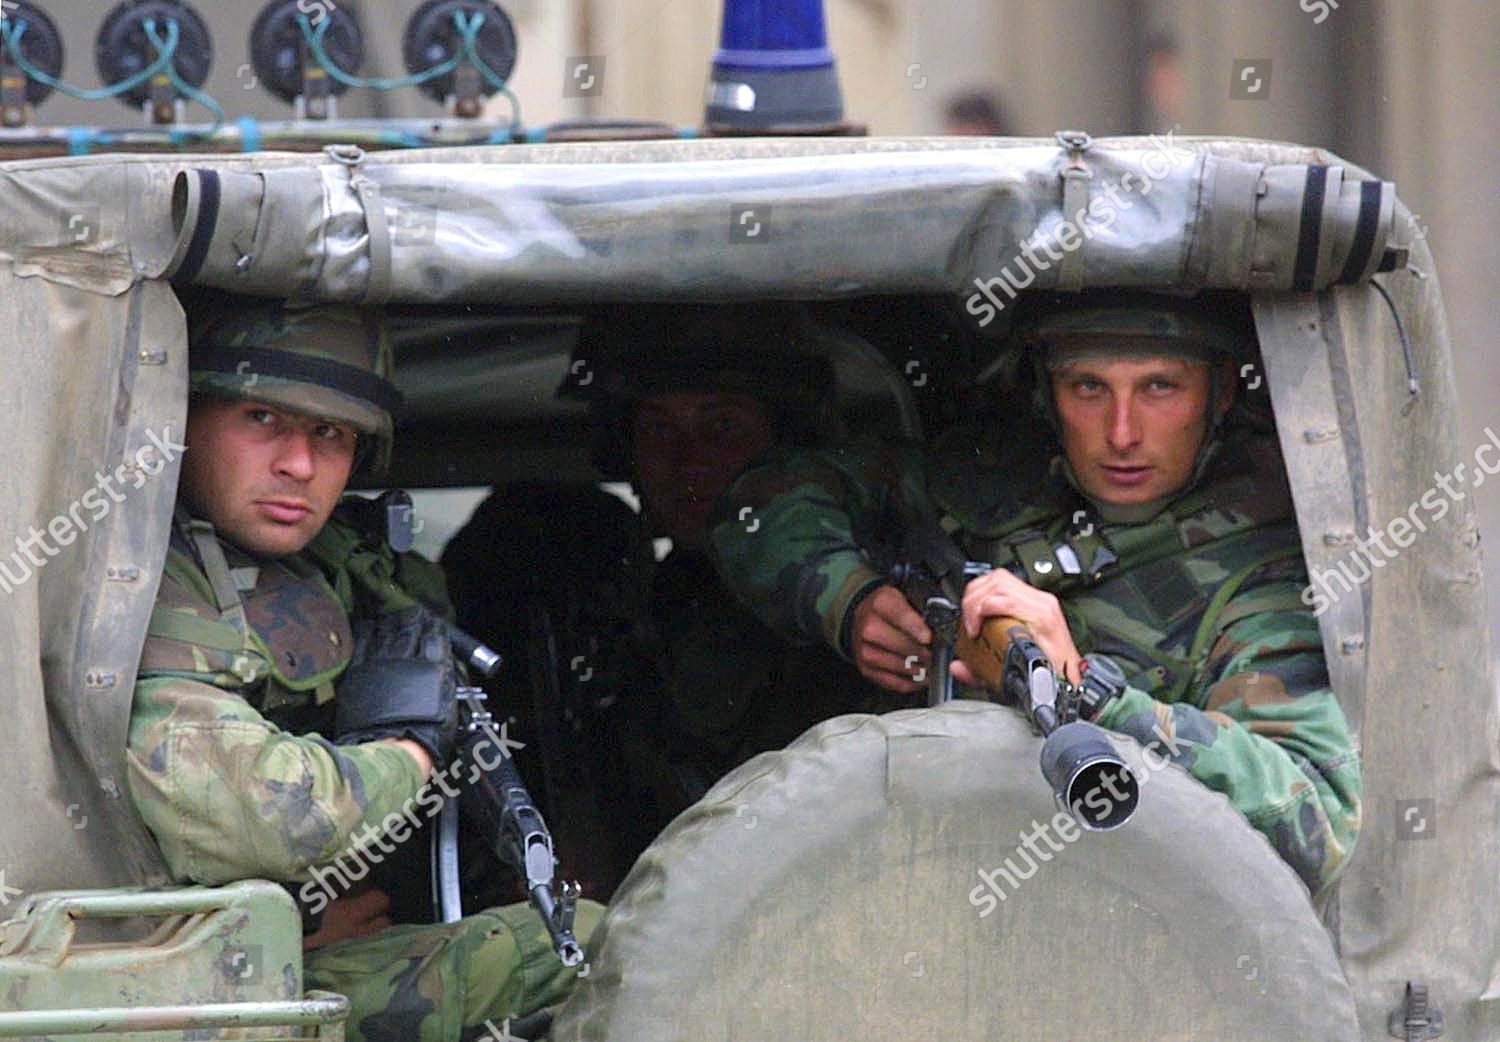 yugoslavia-extra-ordinary-troops2-may-2001-shutterstock-editorial-7743074a.jpg